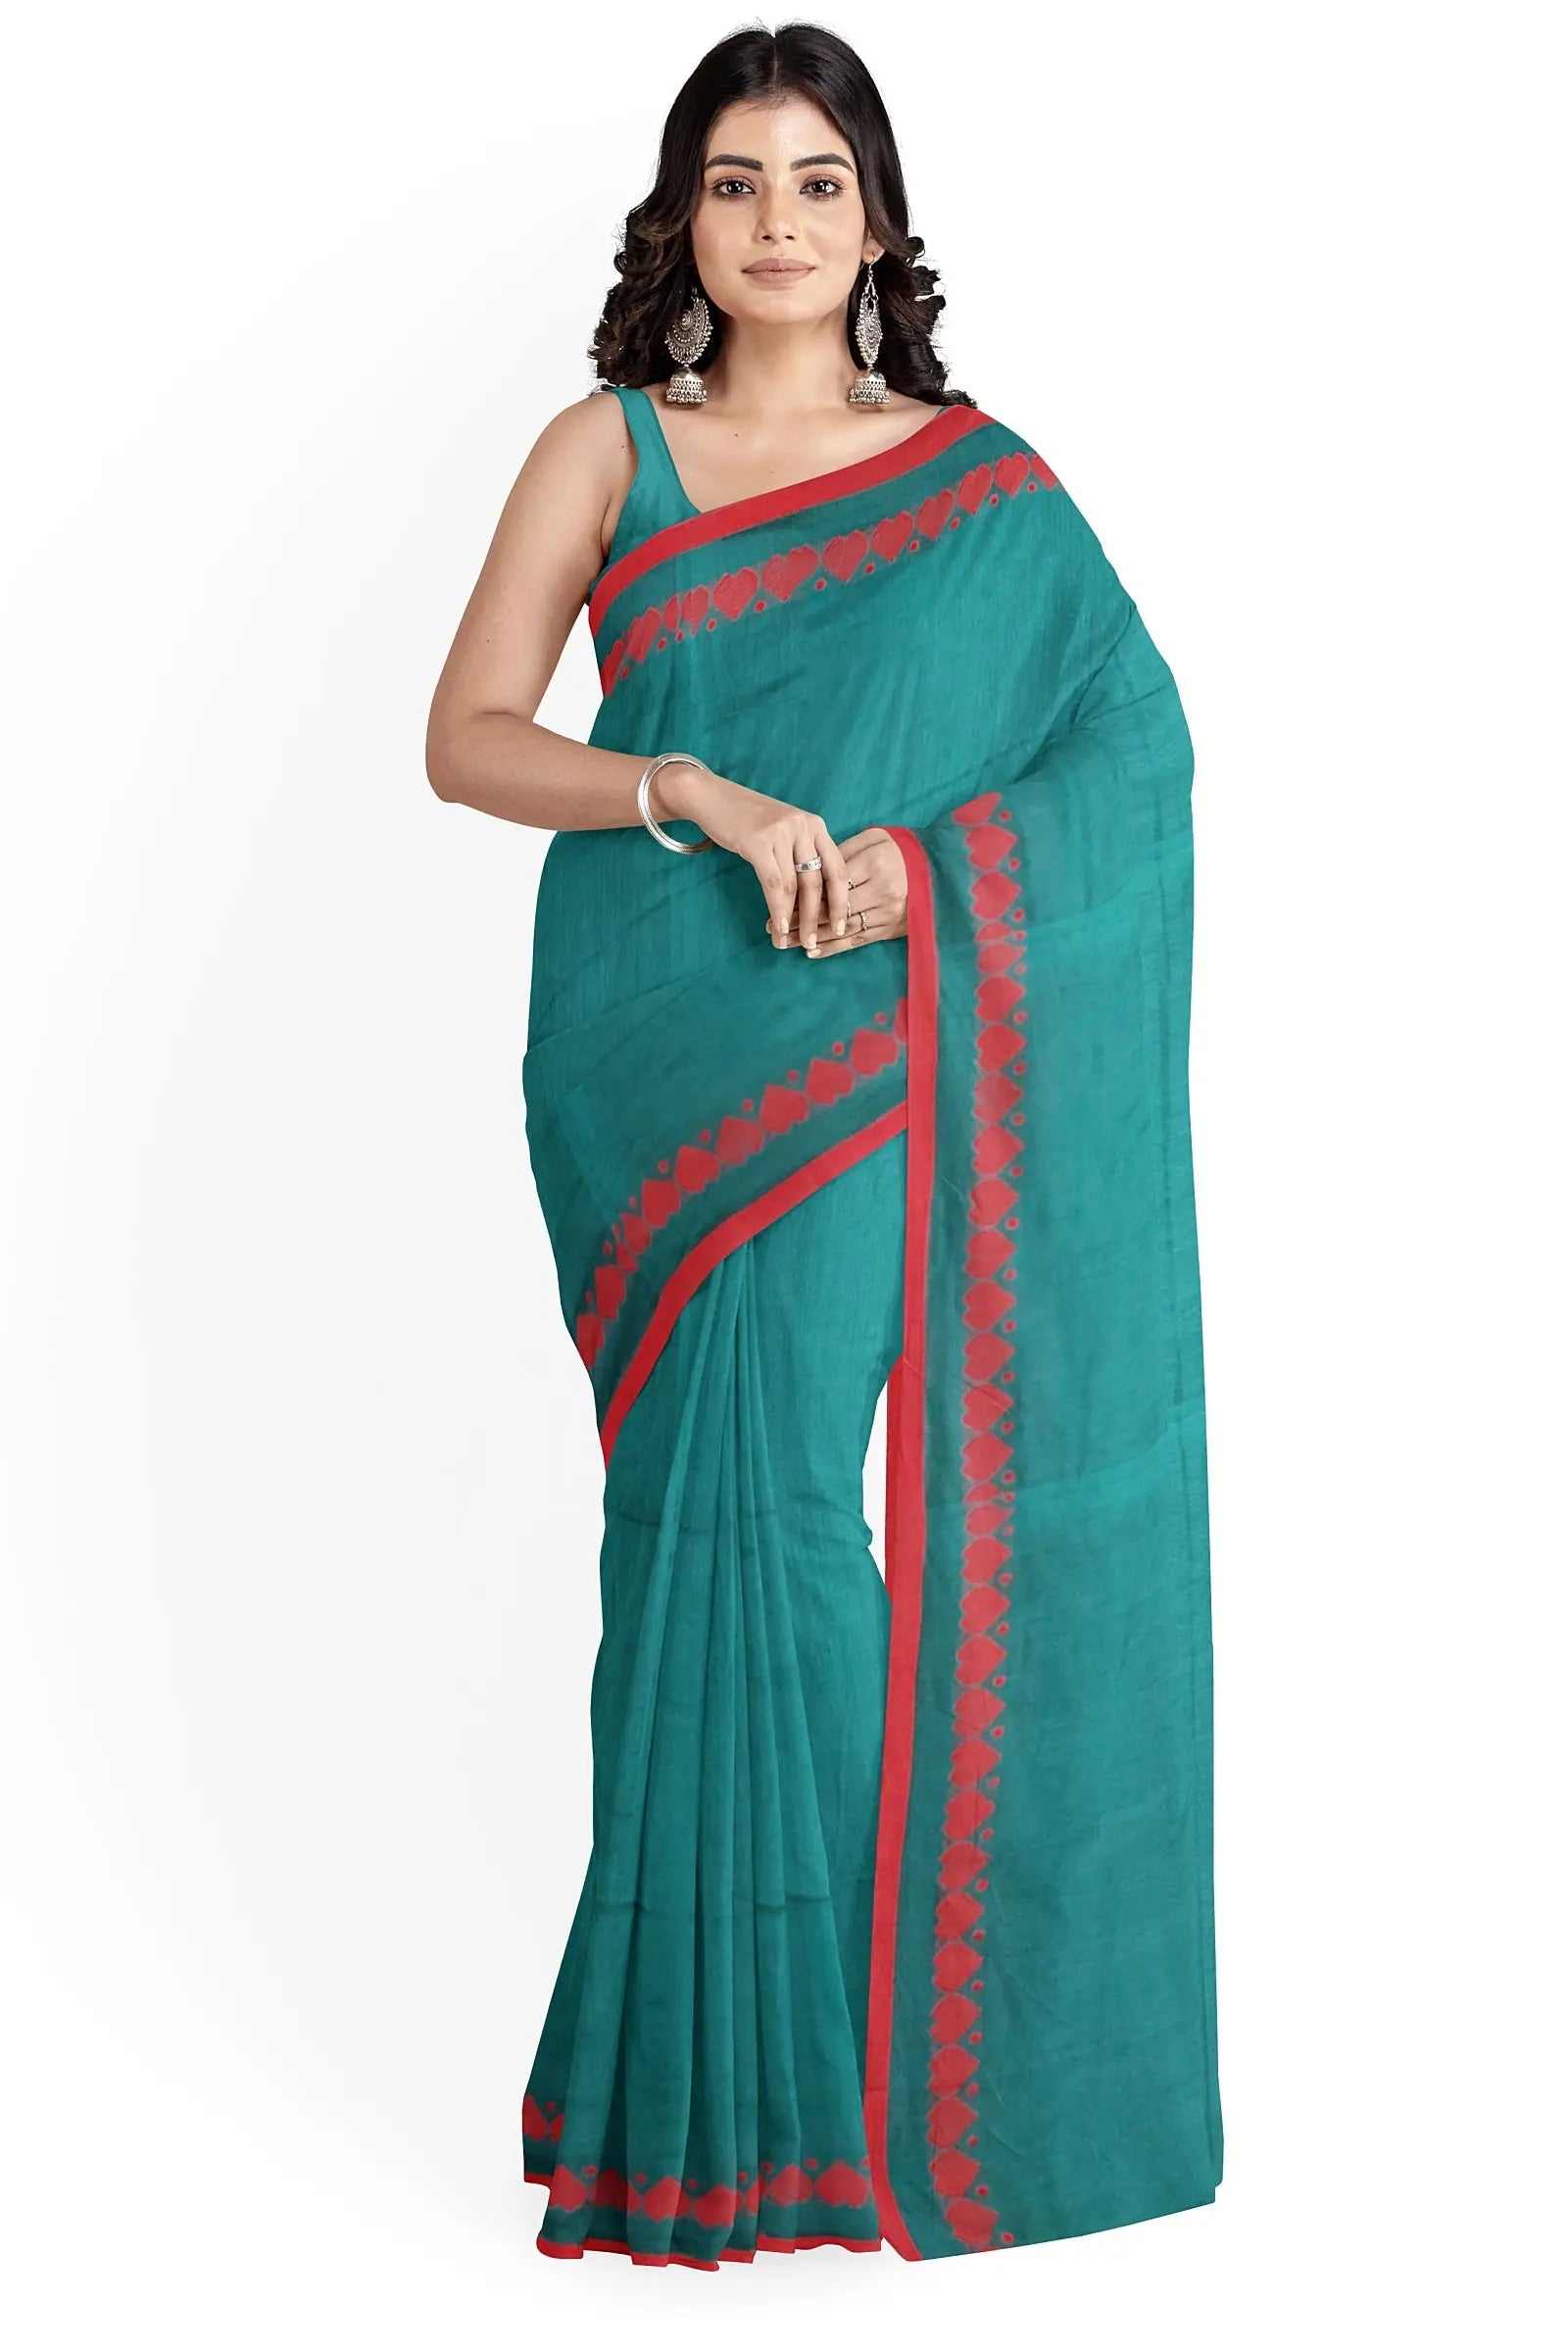 Khadi cotton saree love sea green Putul's fashion